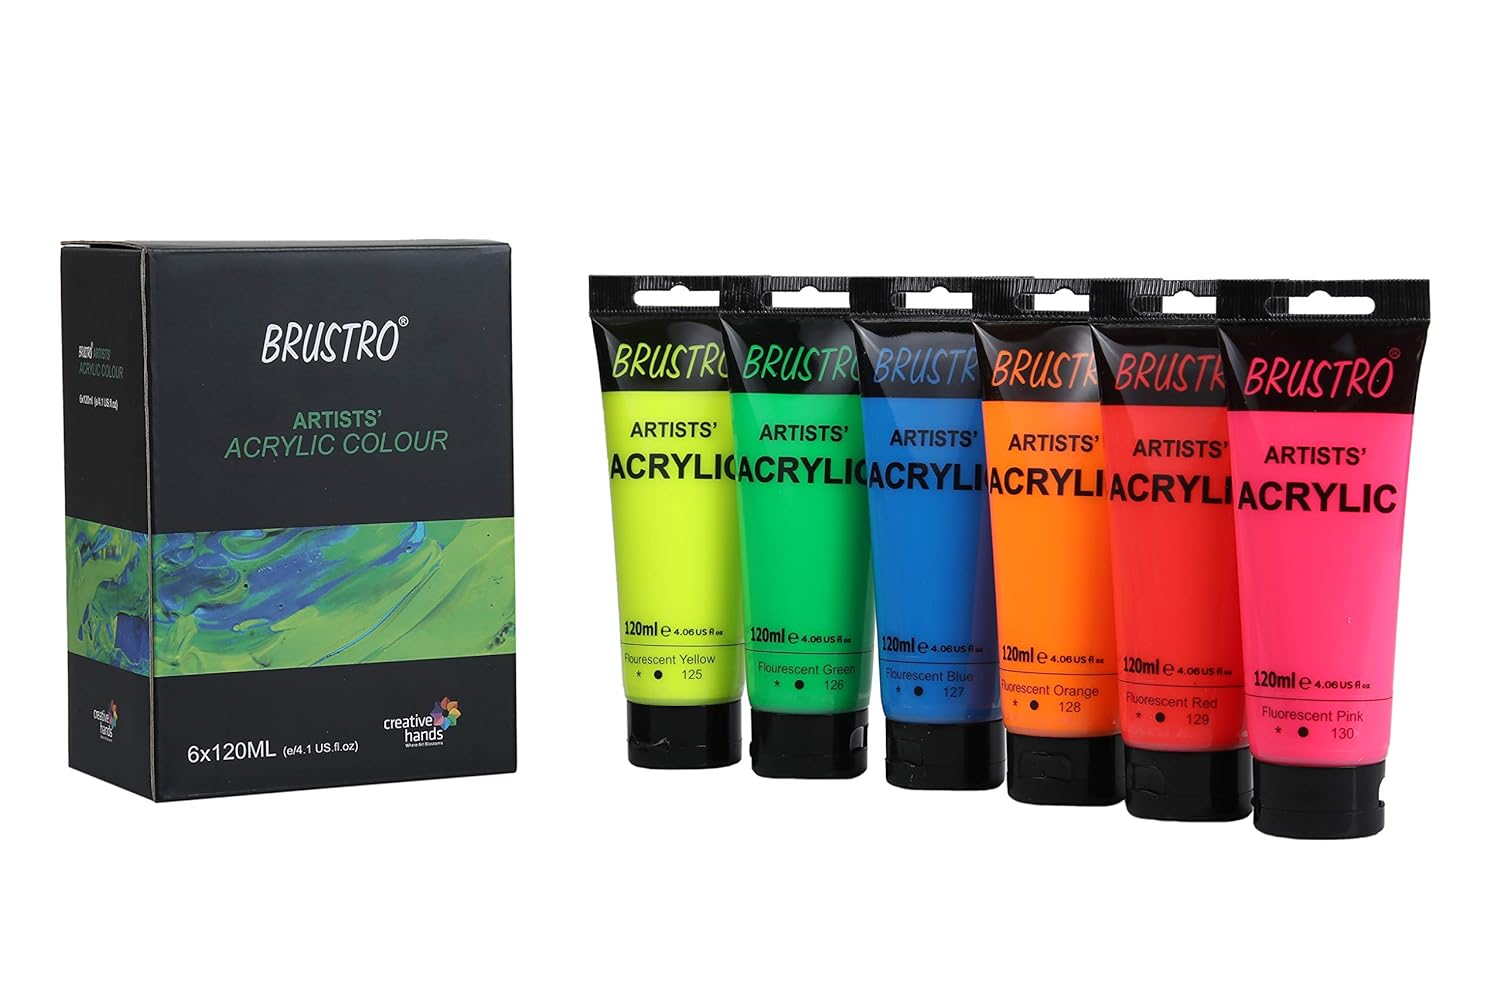 BRUSTRO Artists Acrylic 120ml, Set of 6 Fluorescent Shades